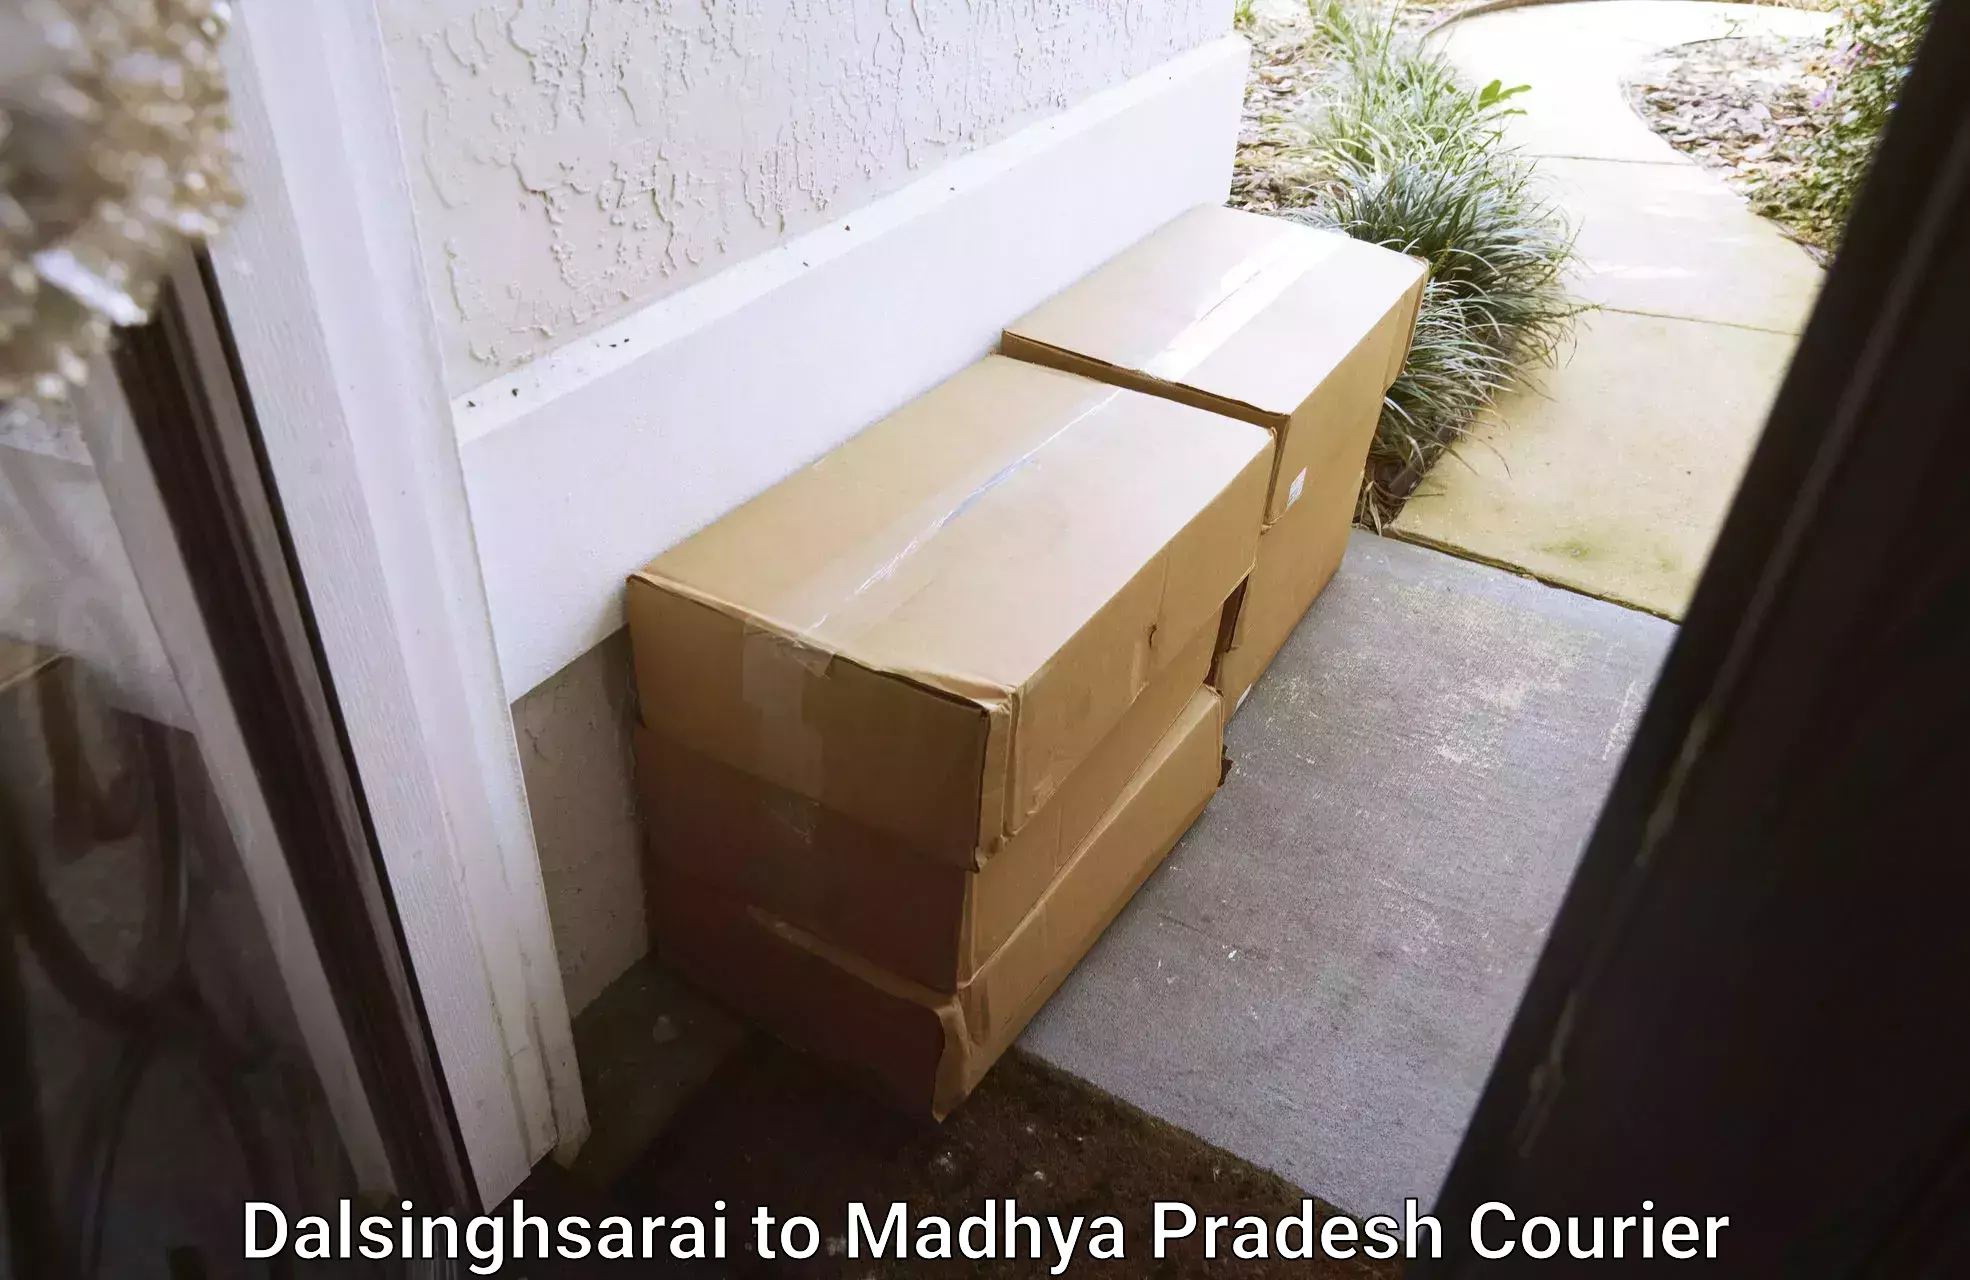 Budget-friendly movers Dalsinghsarai to Madhya Pradesh